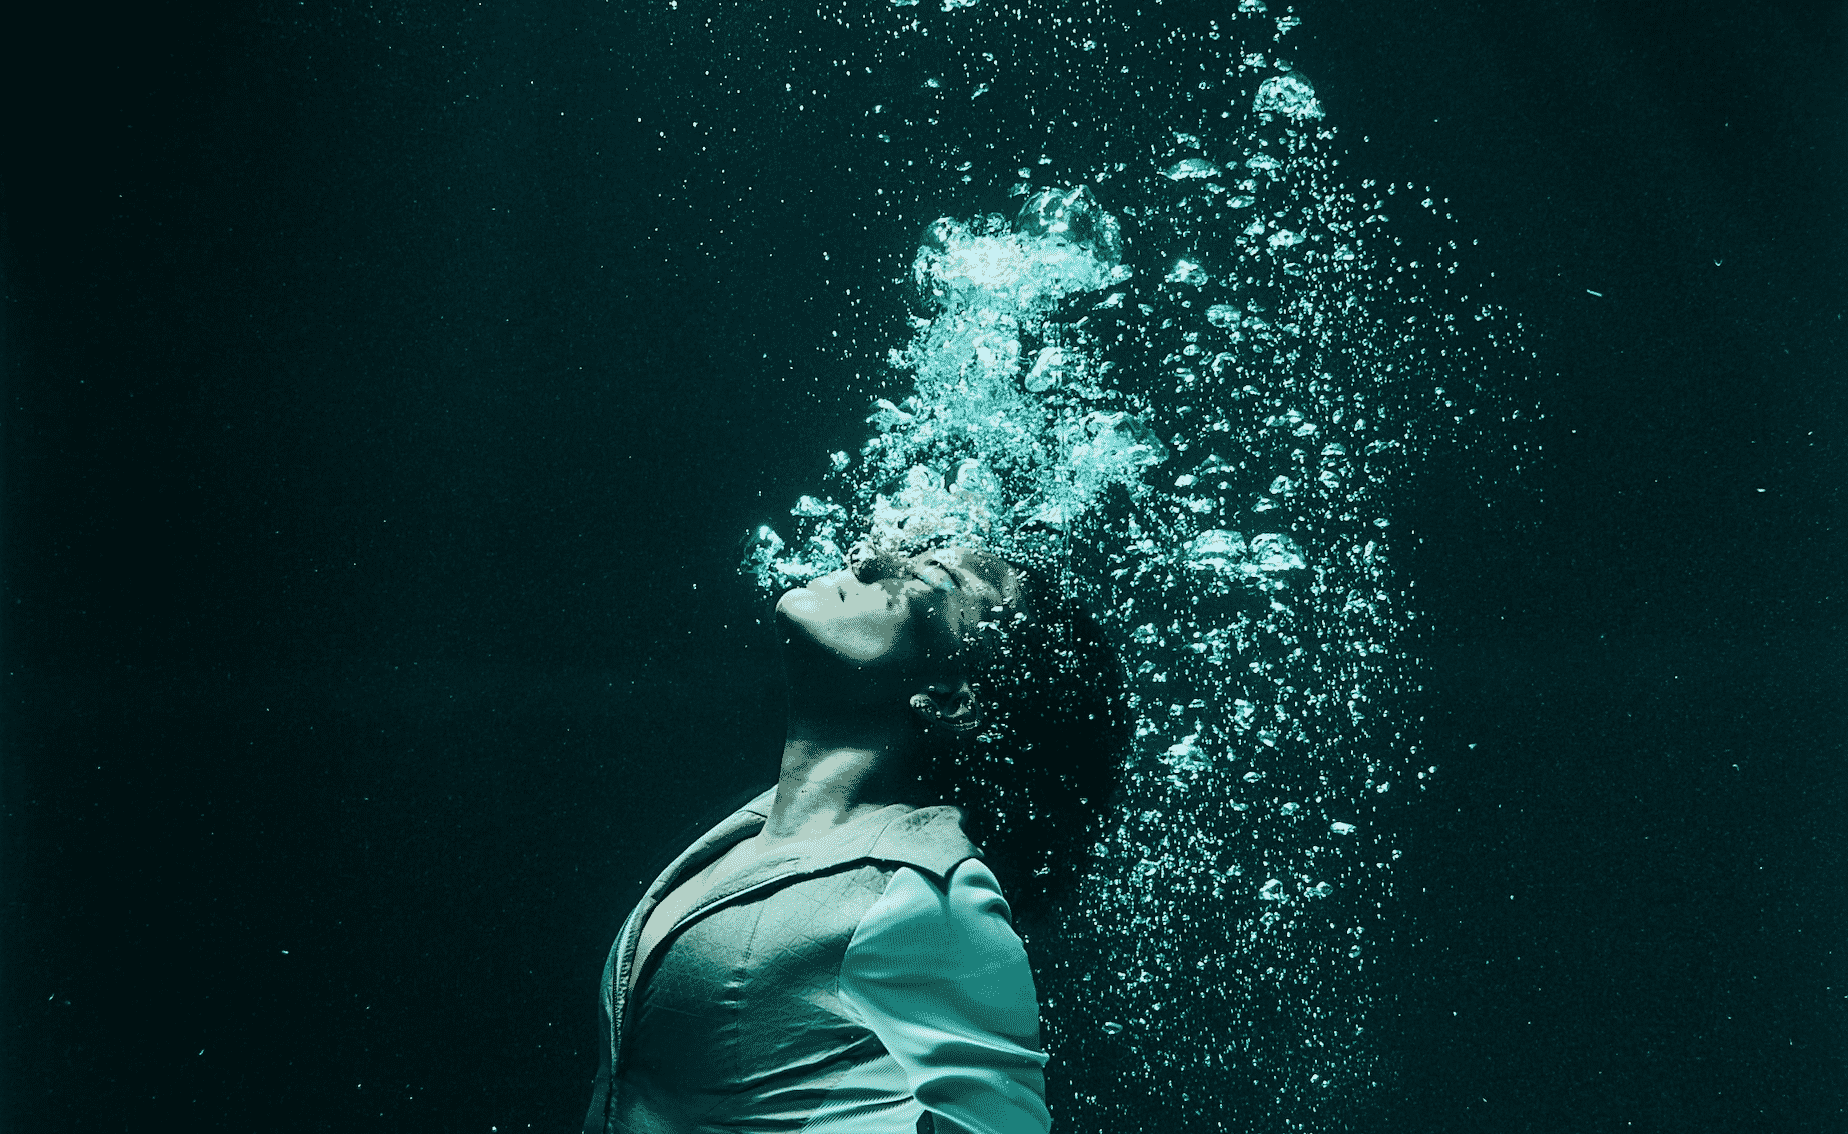 Drowning image